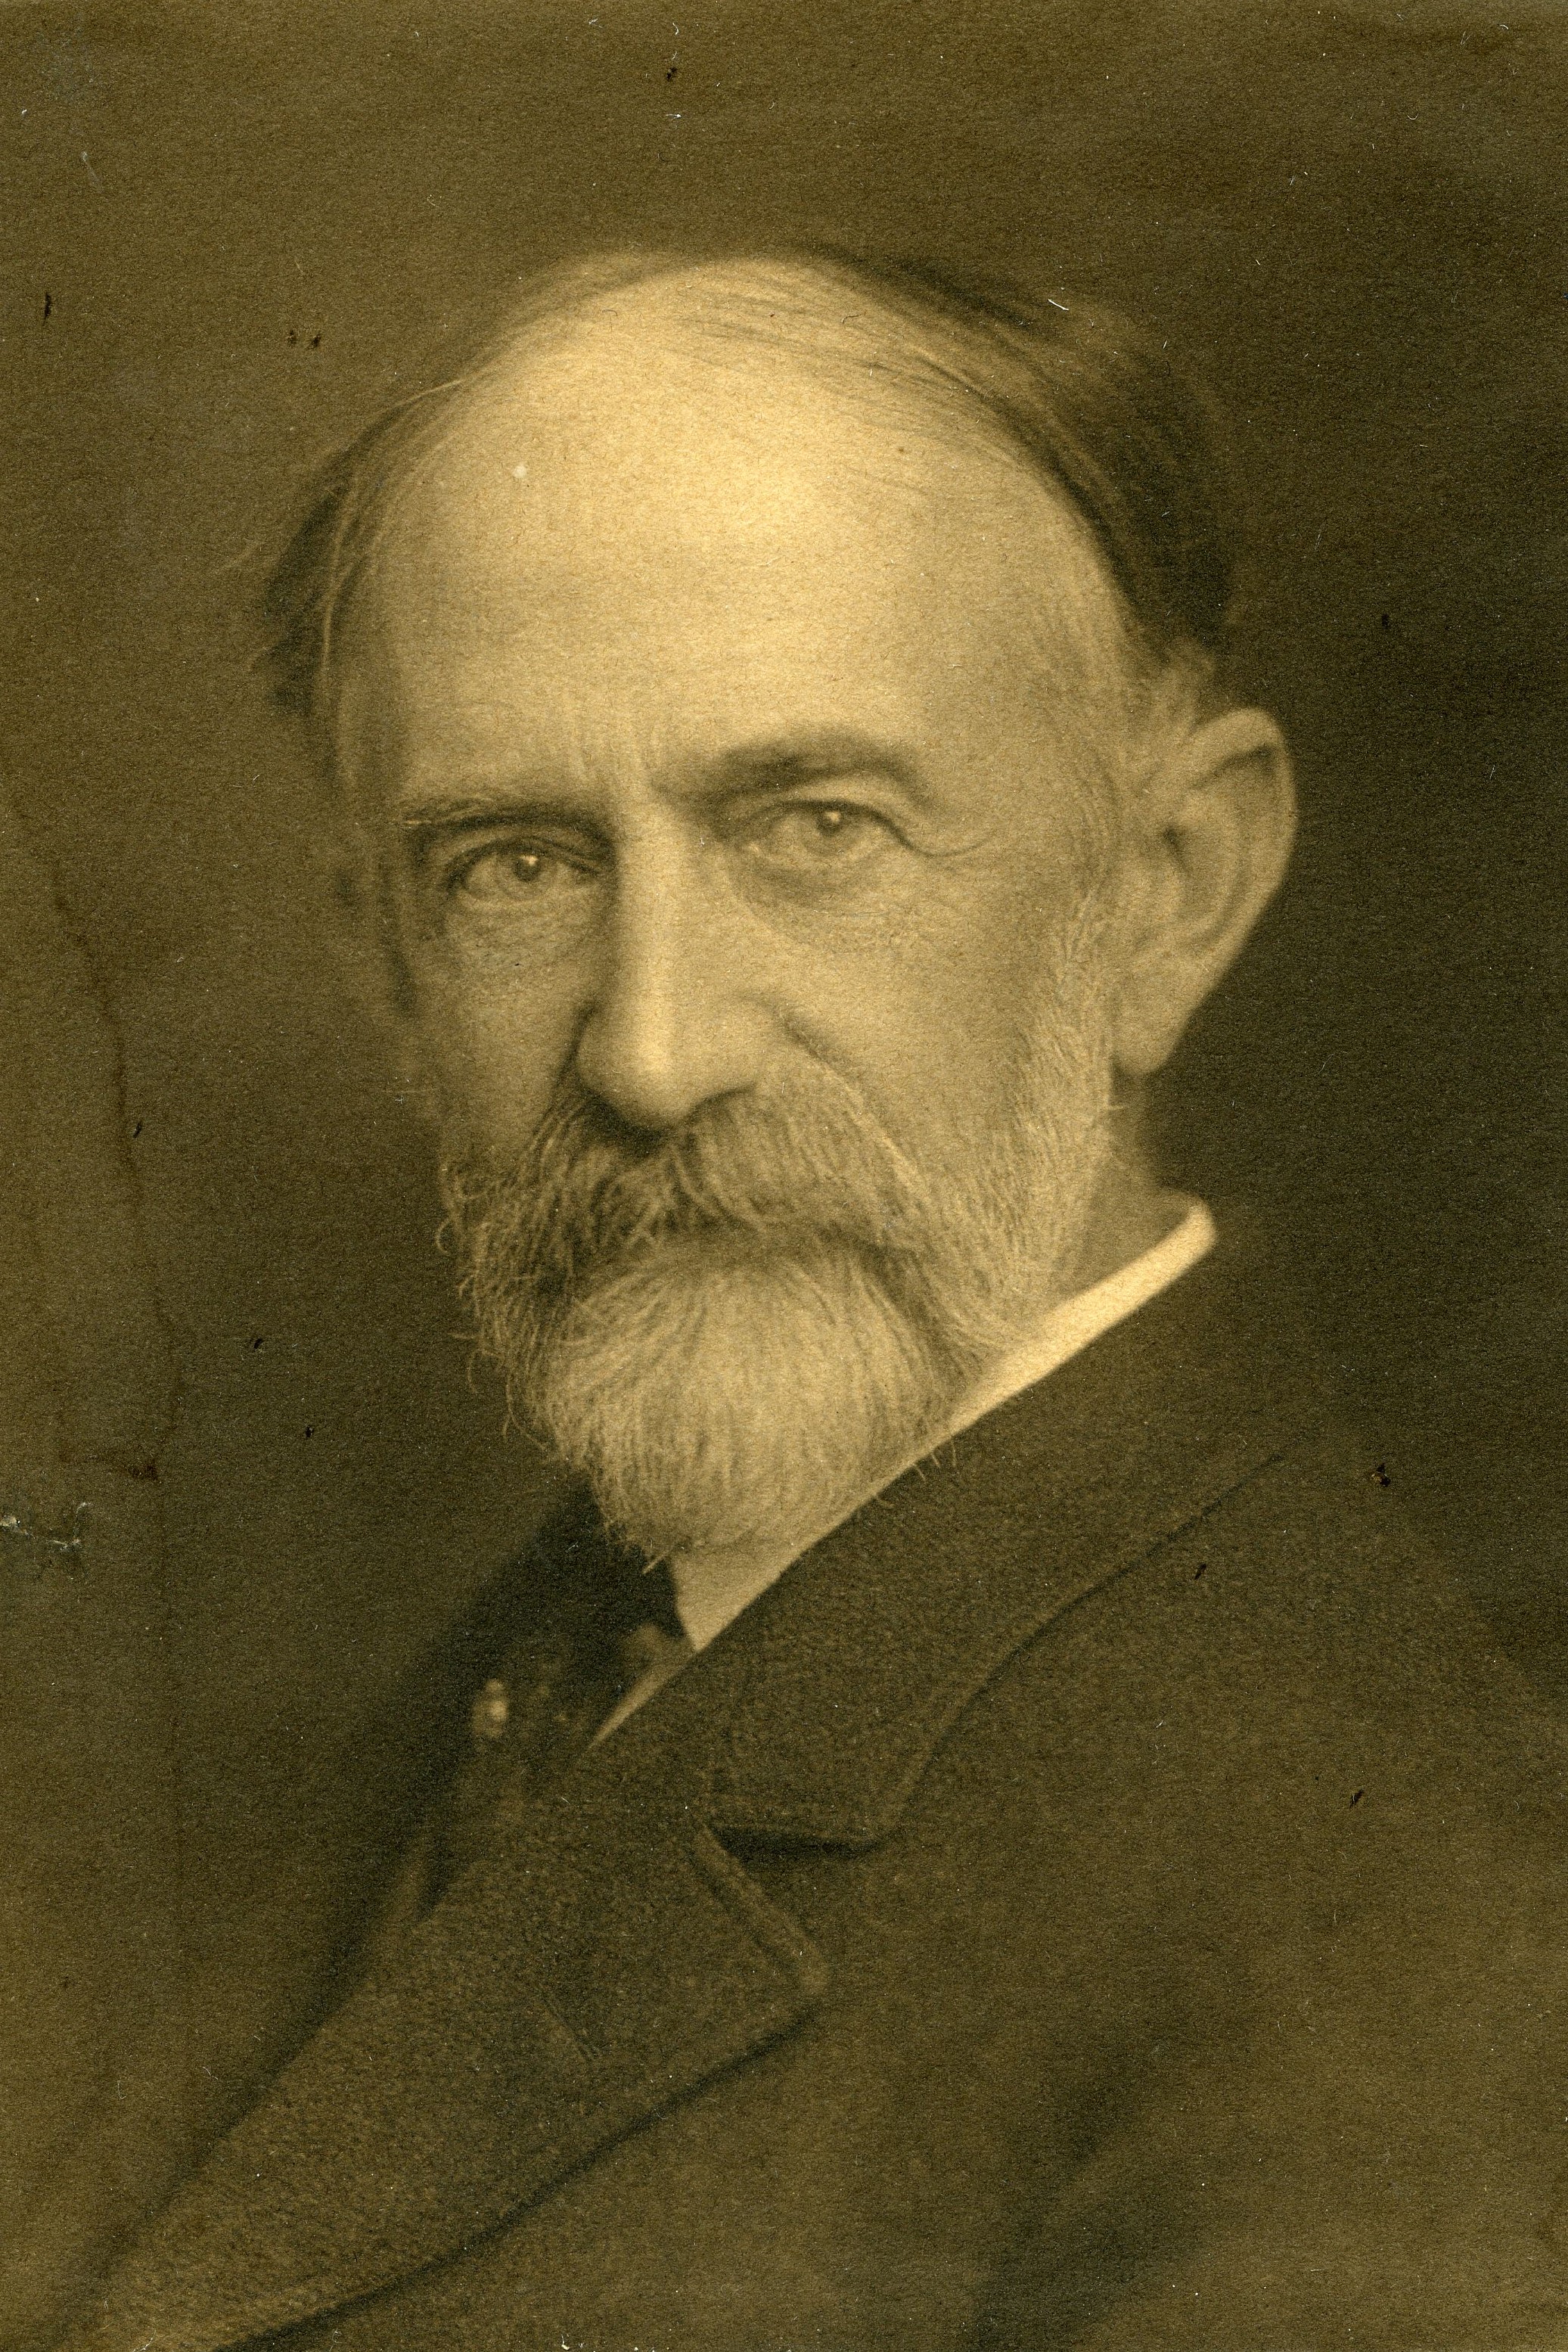 Member portrait of James Craig Nicoll